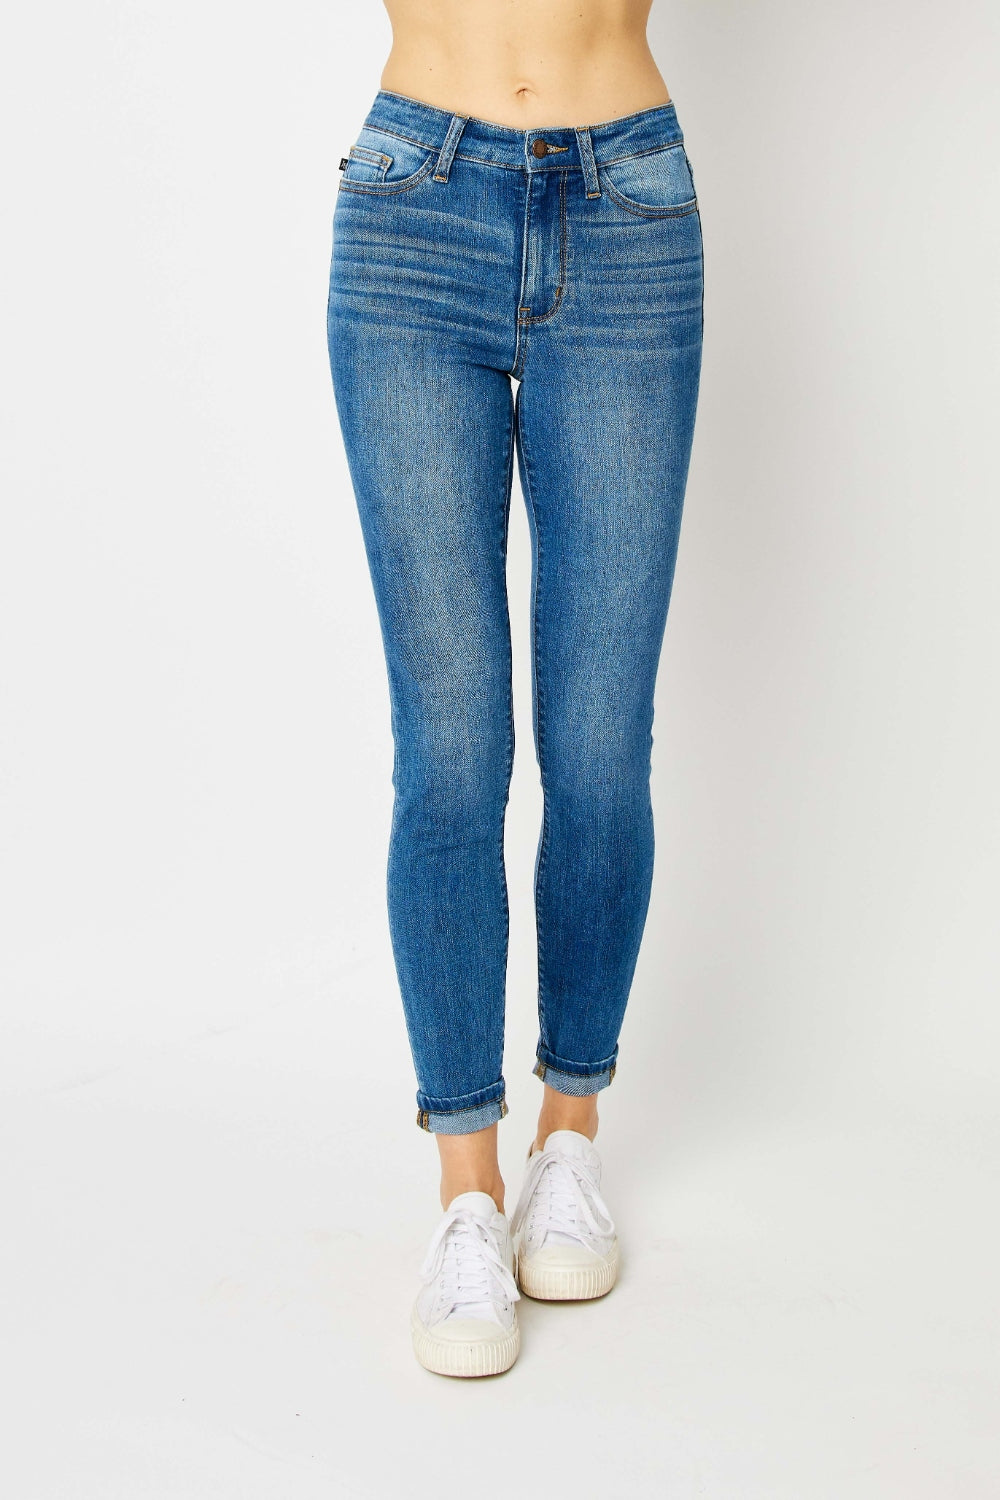 Judy Blue Full Size Cuffed Hem Skinny Jeans pants Krazy Heart Designs Boutique   